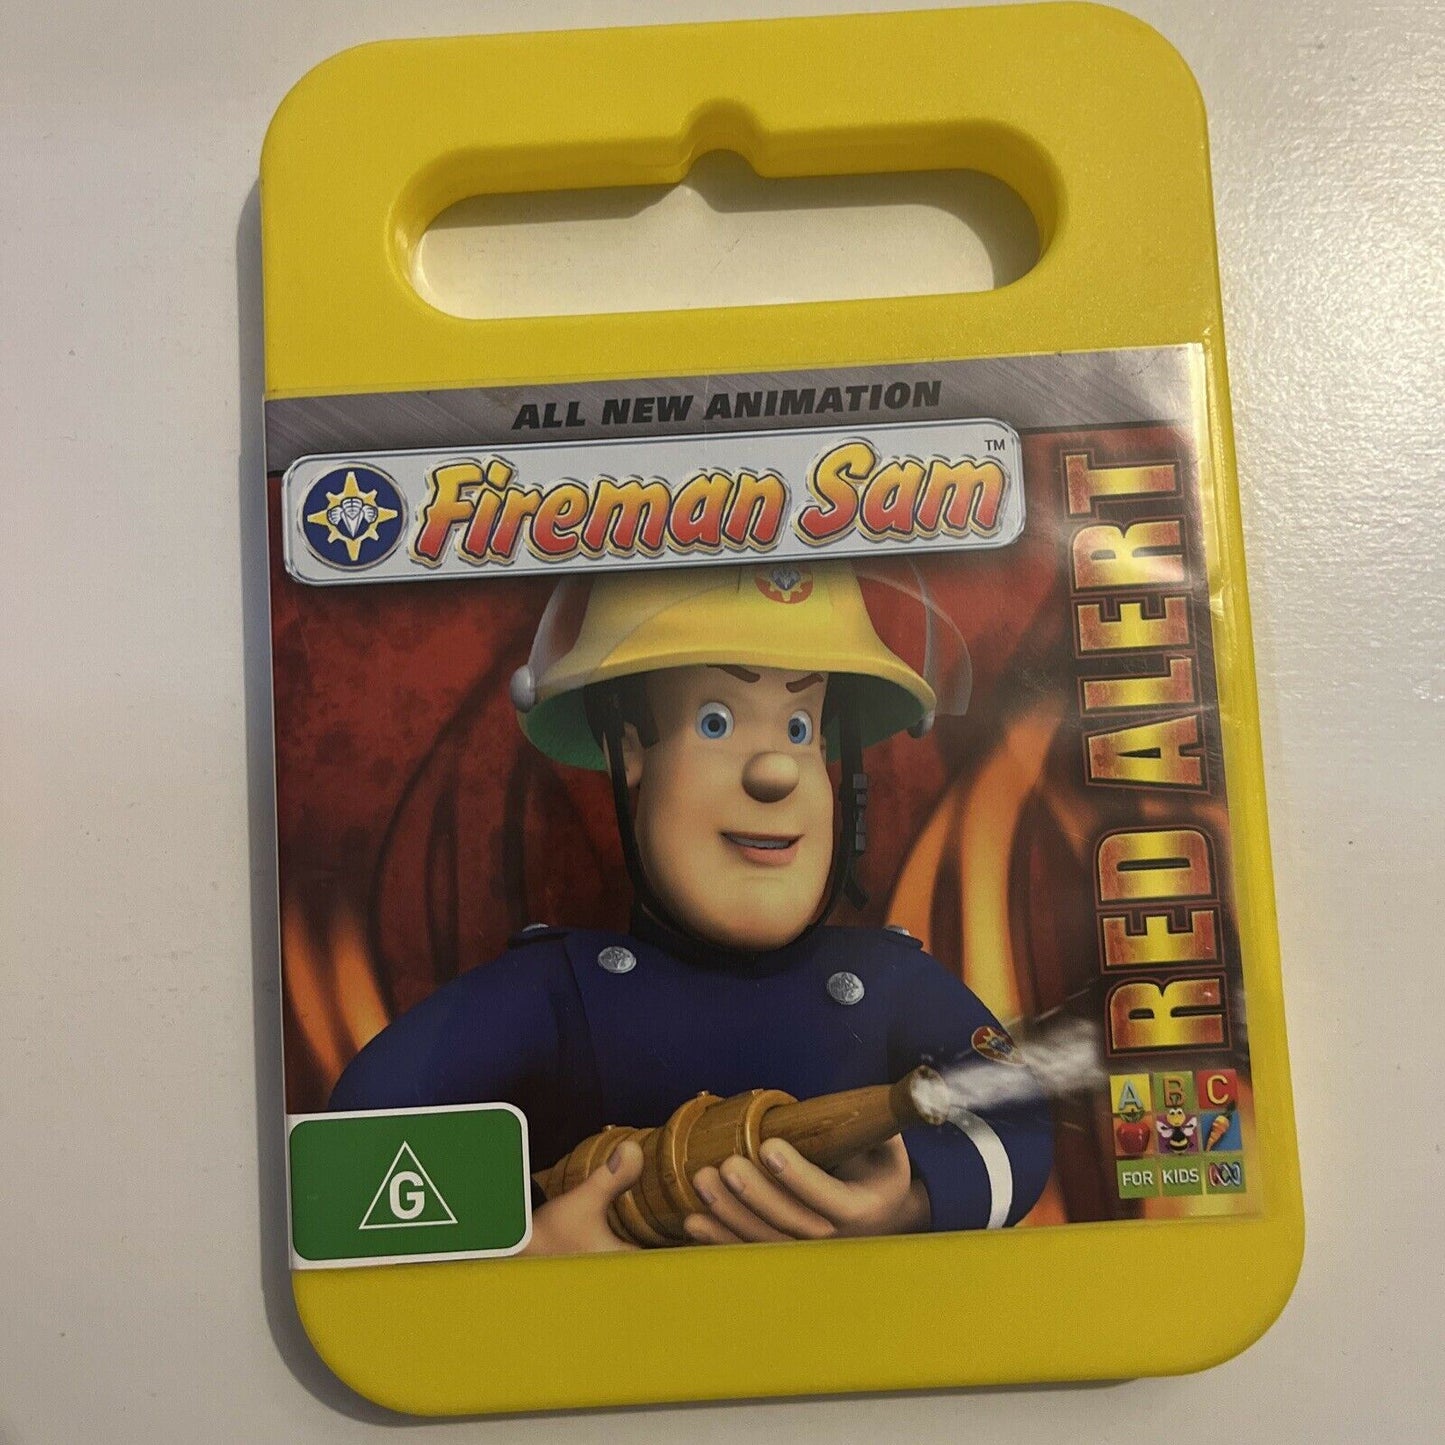 Fireman Sam - Snow Trouble / Red Alert (DVD, 2013, 2-Disc) Region 4